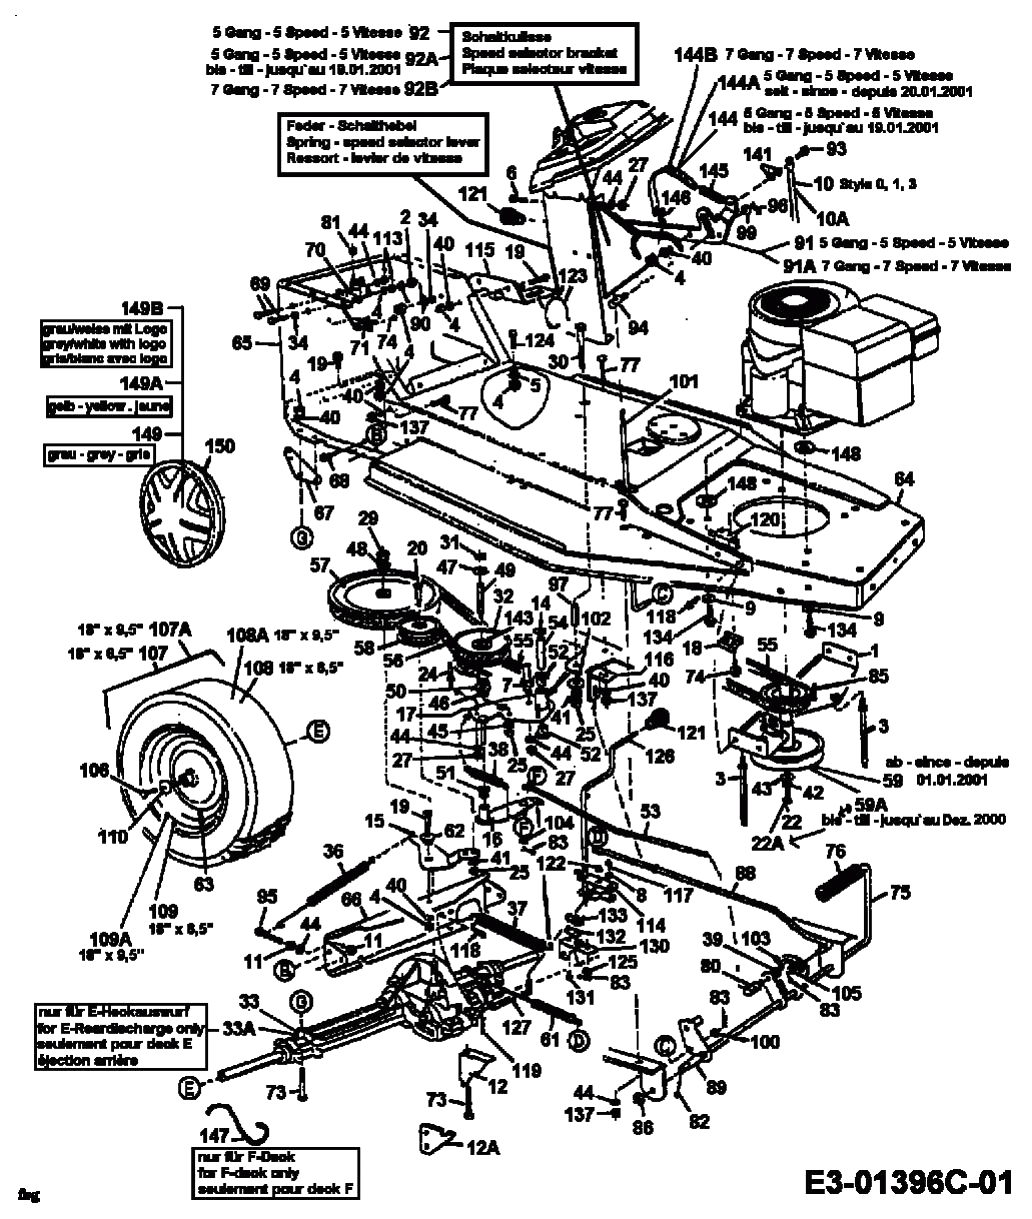 MTD Артикул 13A1450C600 (год выпуска 2000). Система привода, шкив двигателя, педали, задние колеса